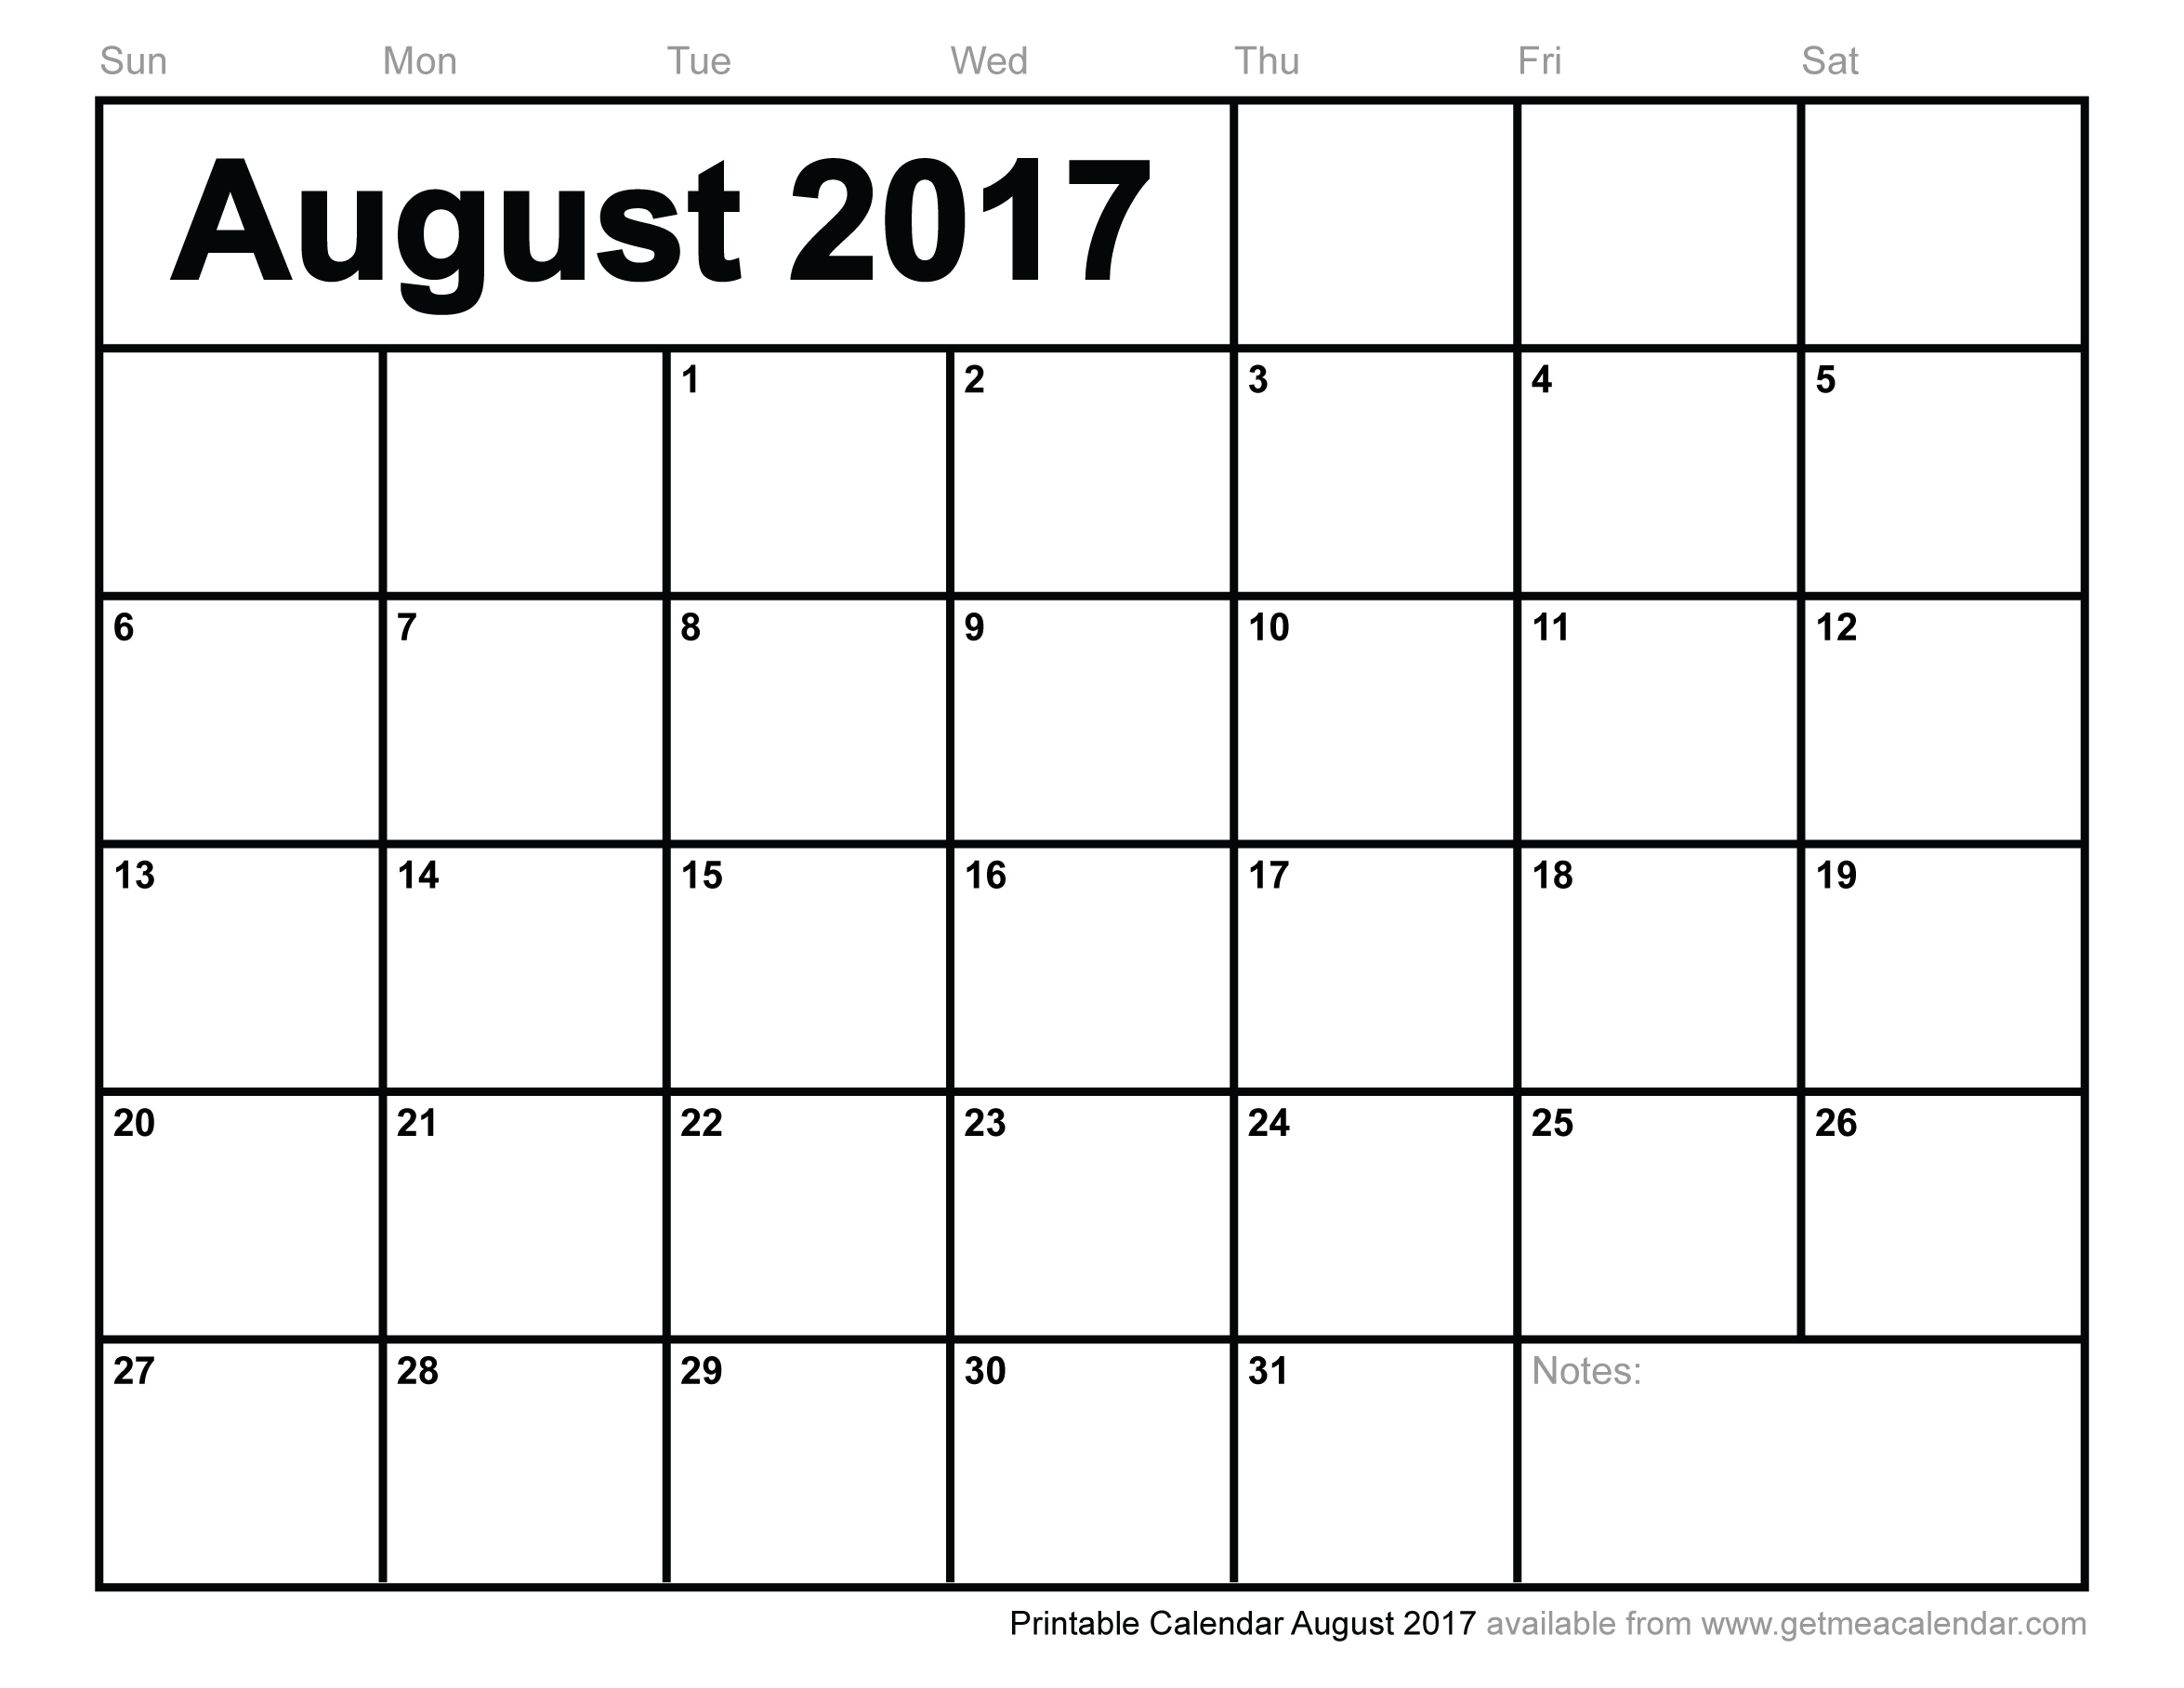 August 2017 Printable CalendarPrintables World | Printables World